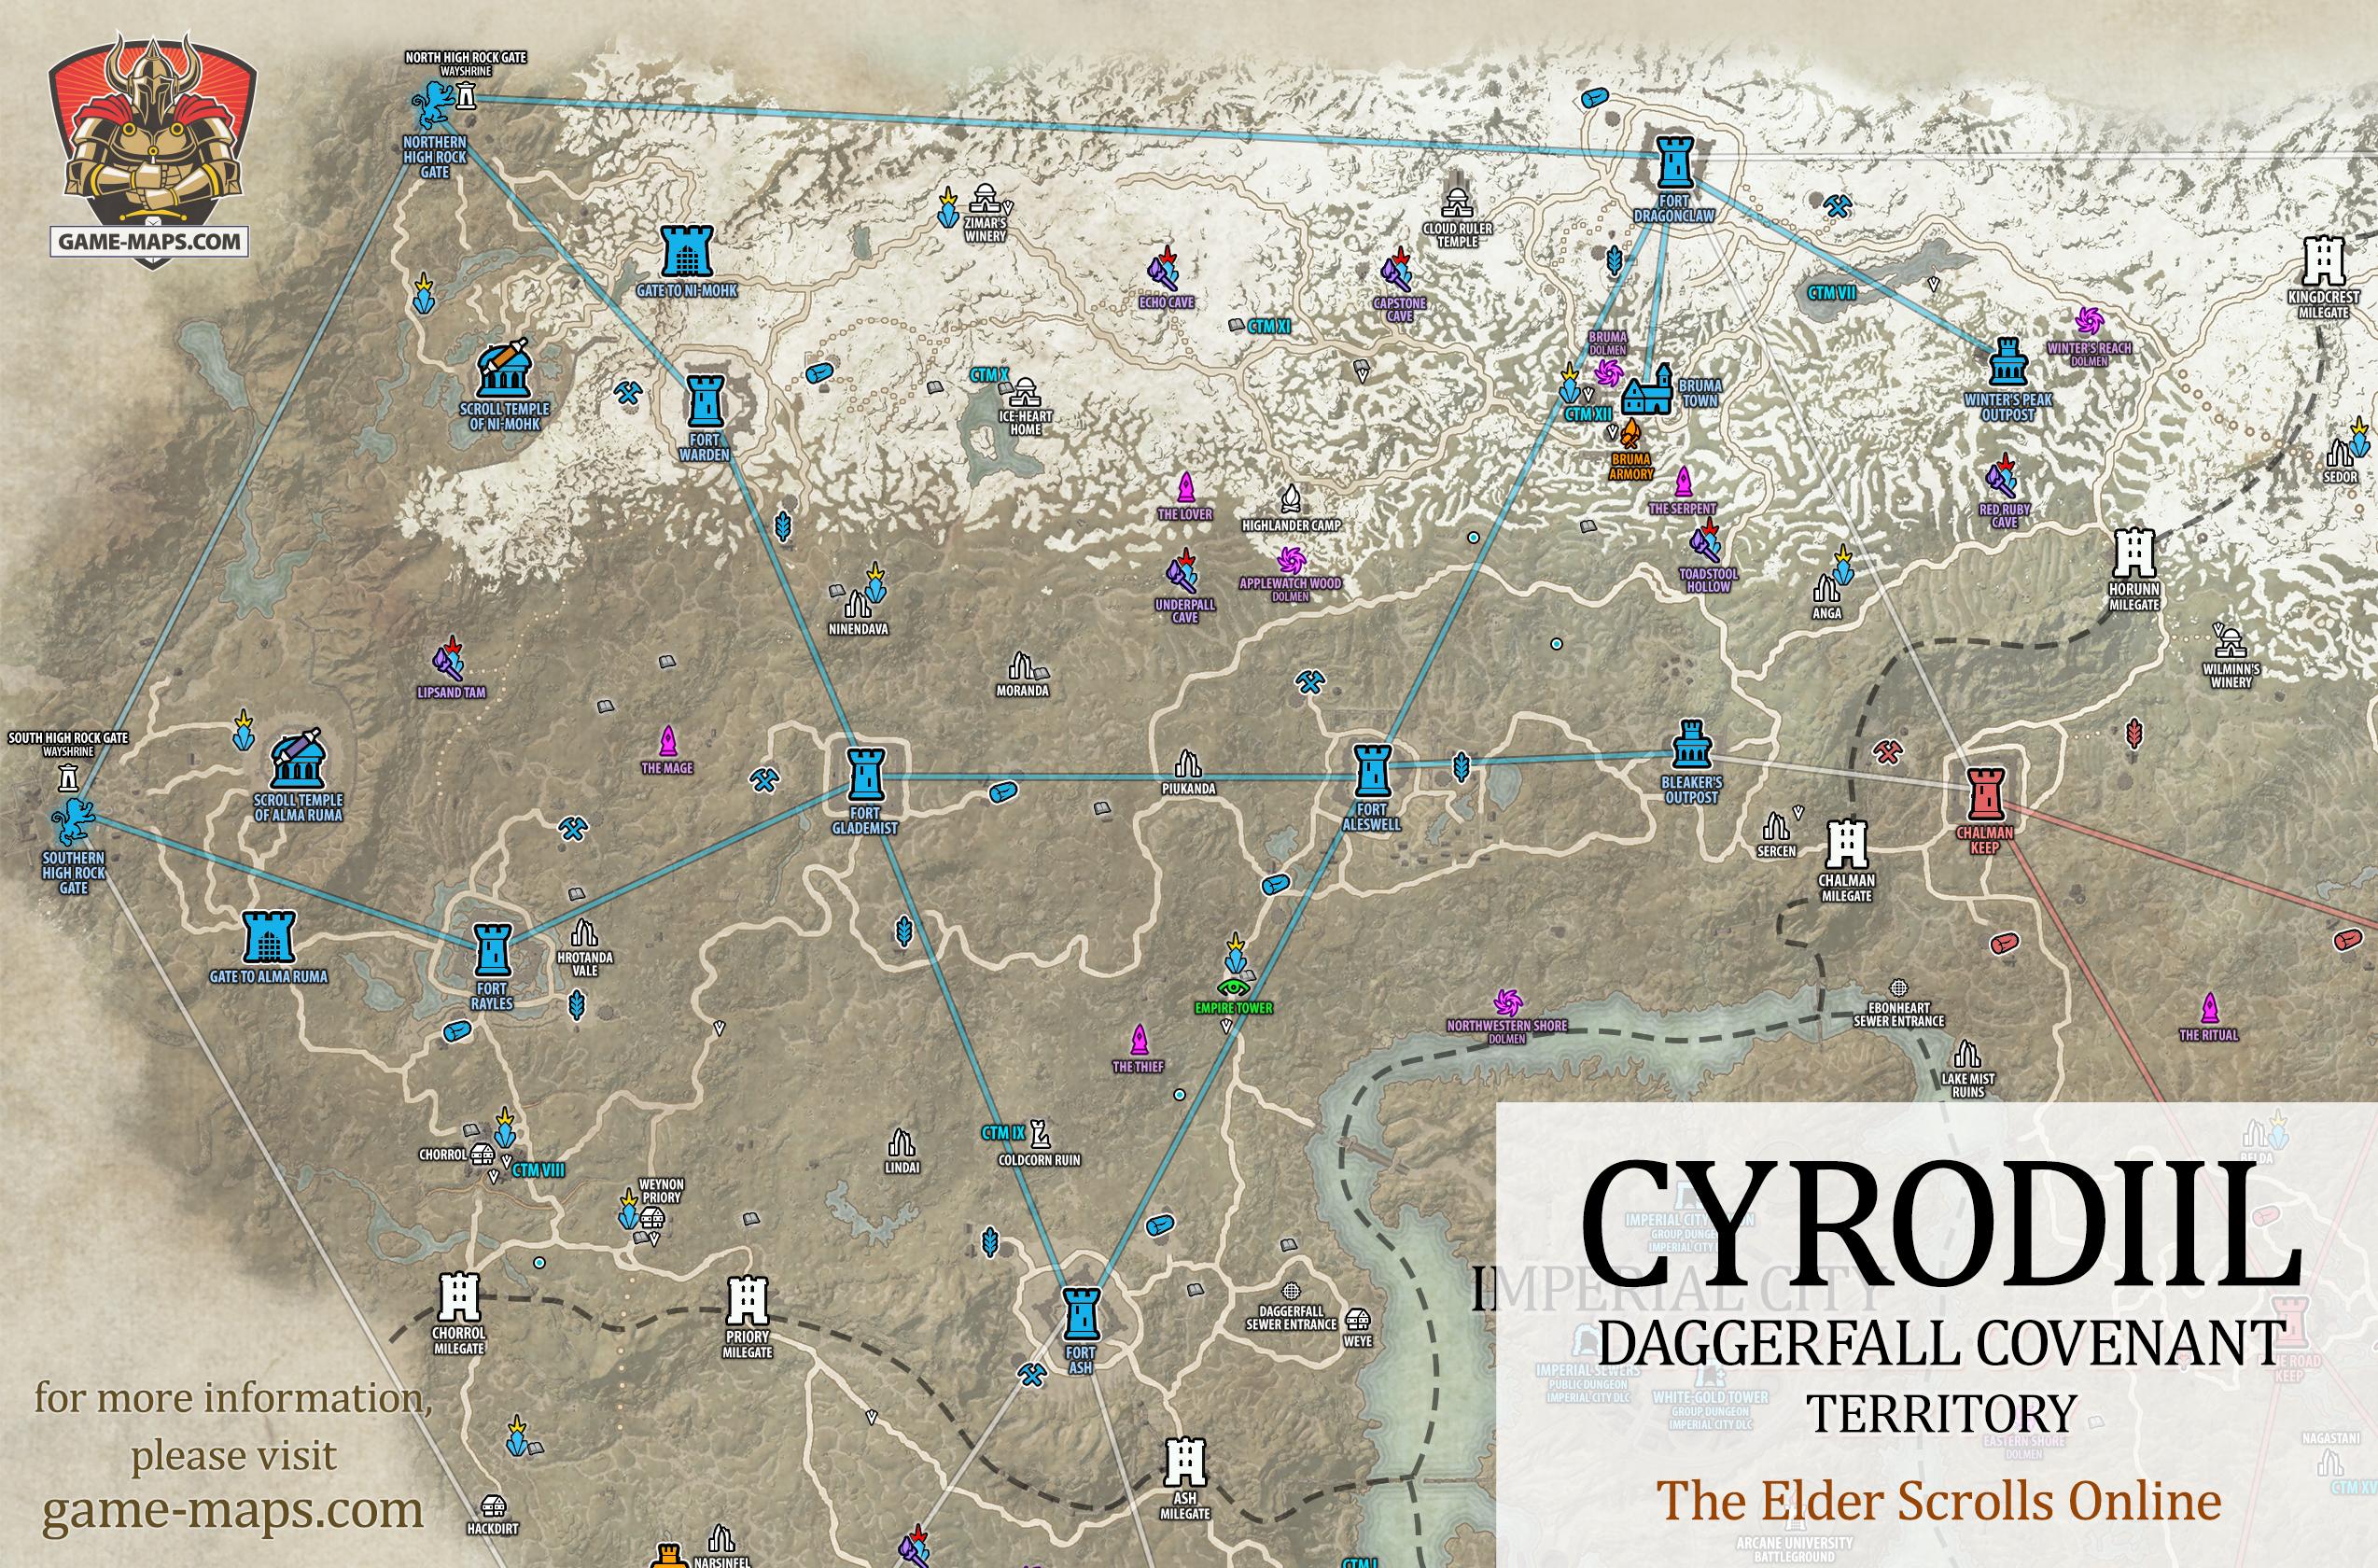 Cyrodiil Daggerfall Covenant Territory Map for The Elder Scrolls Online, Alliance War (PvP) (ESO).